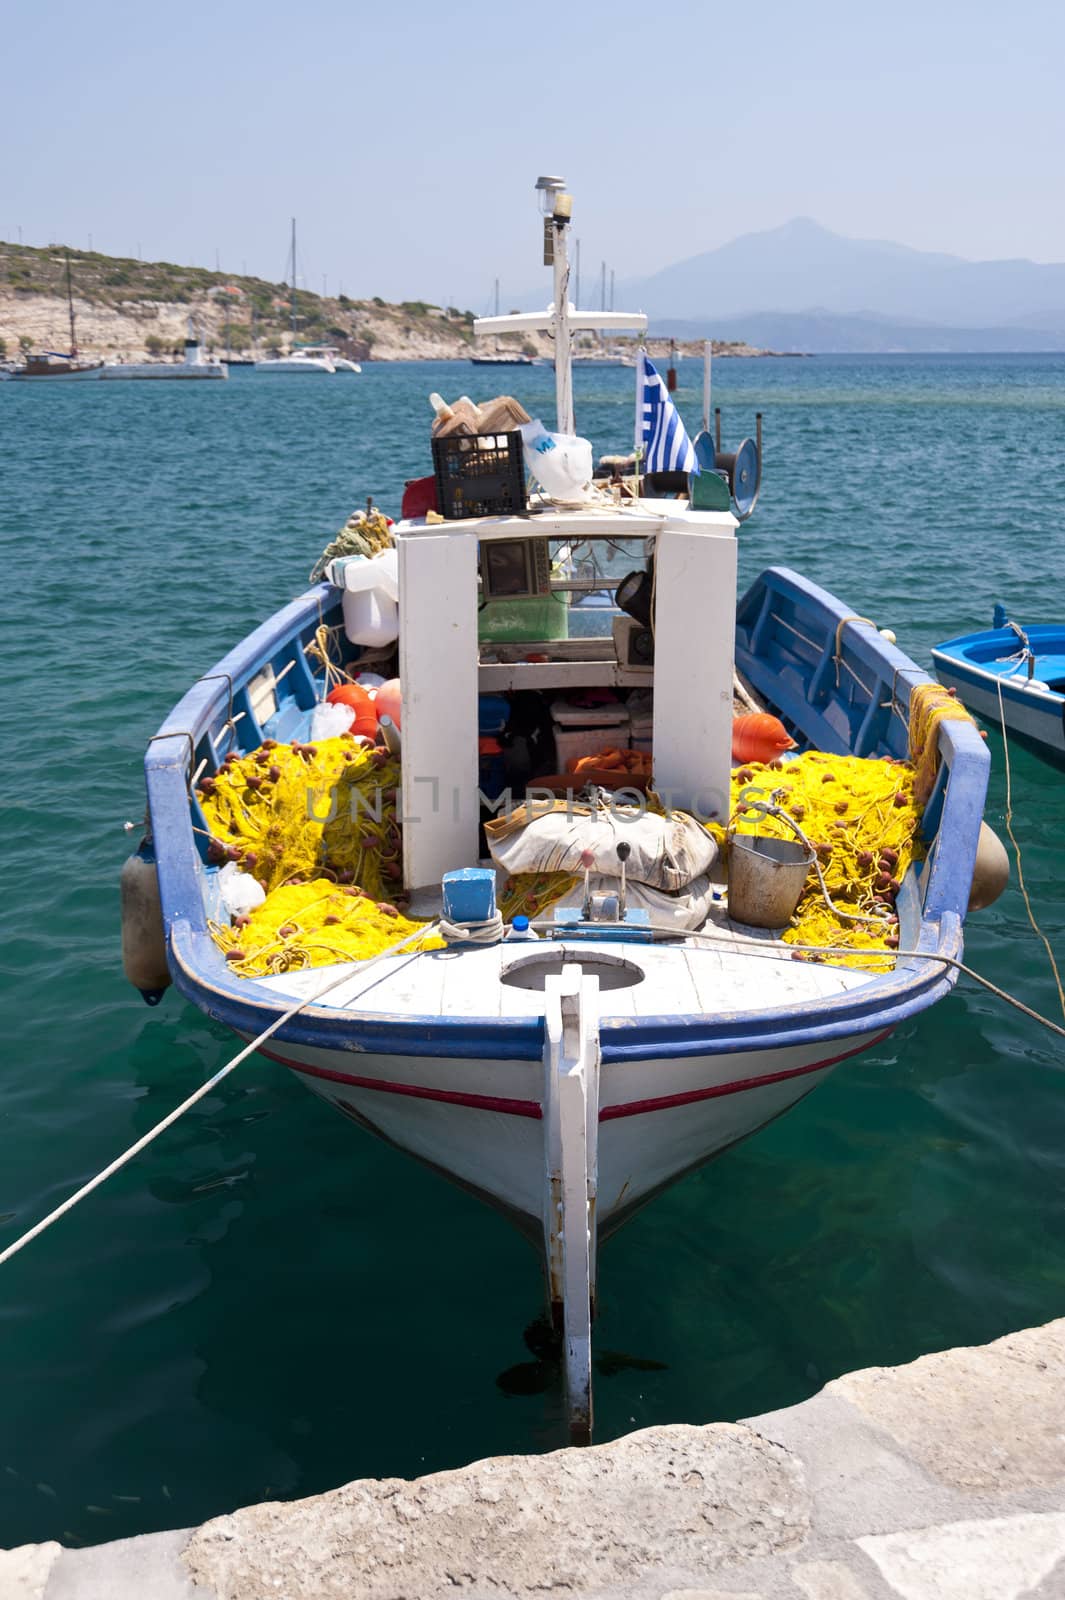 Fishing boats on Samos